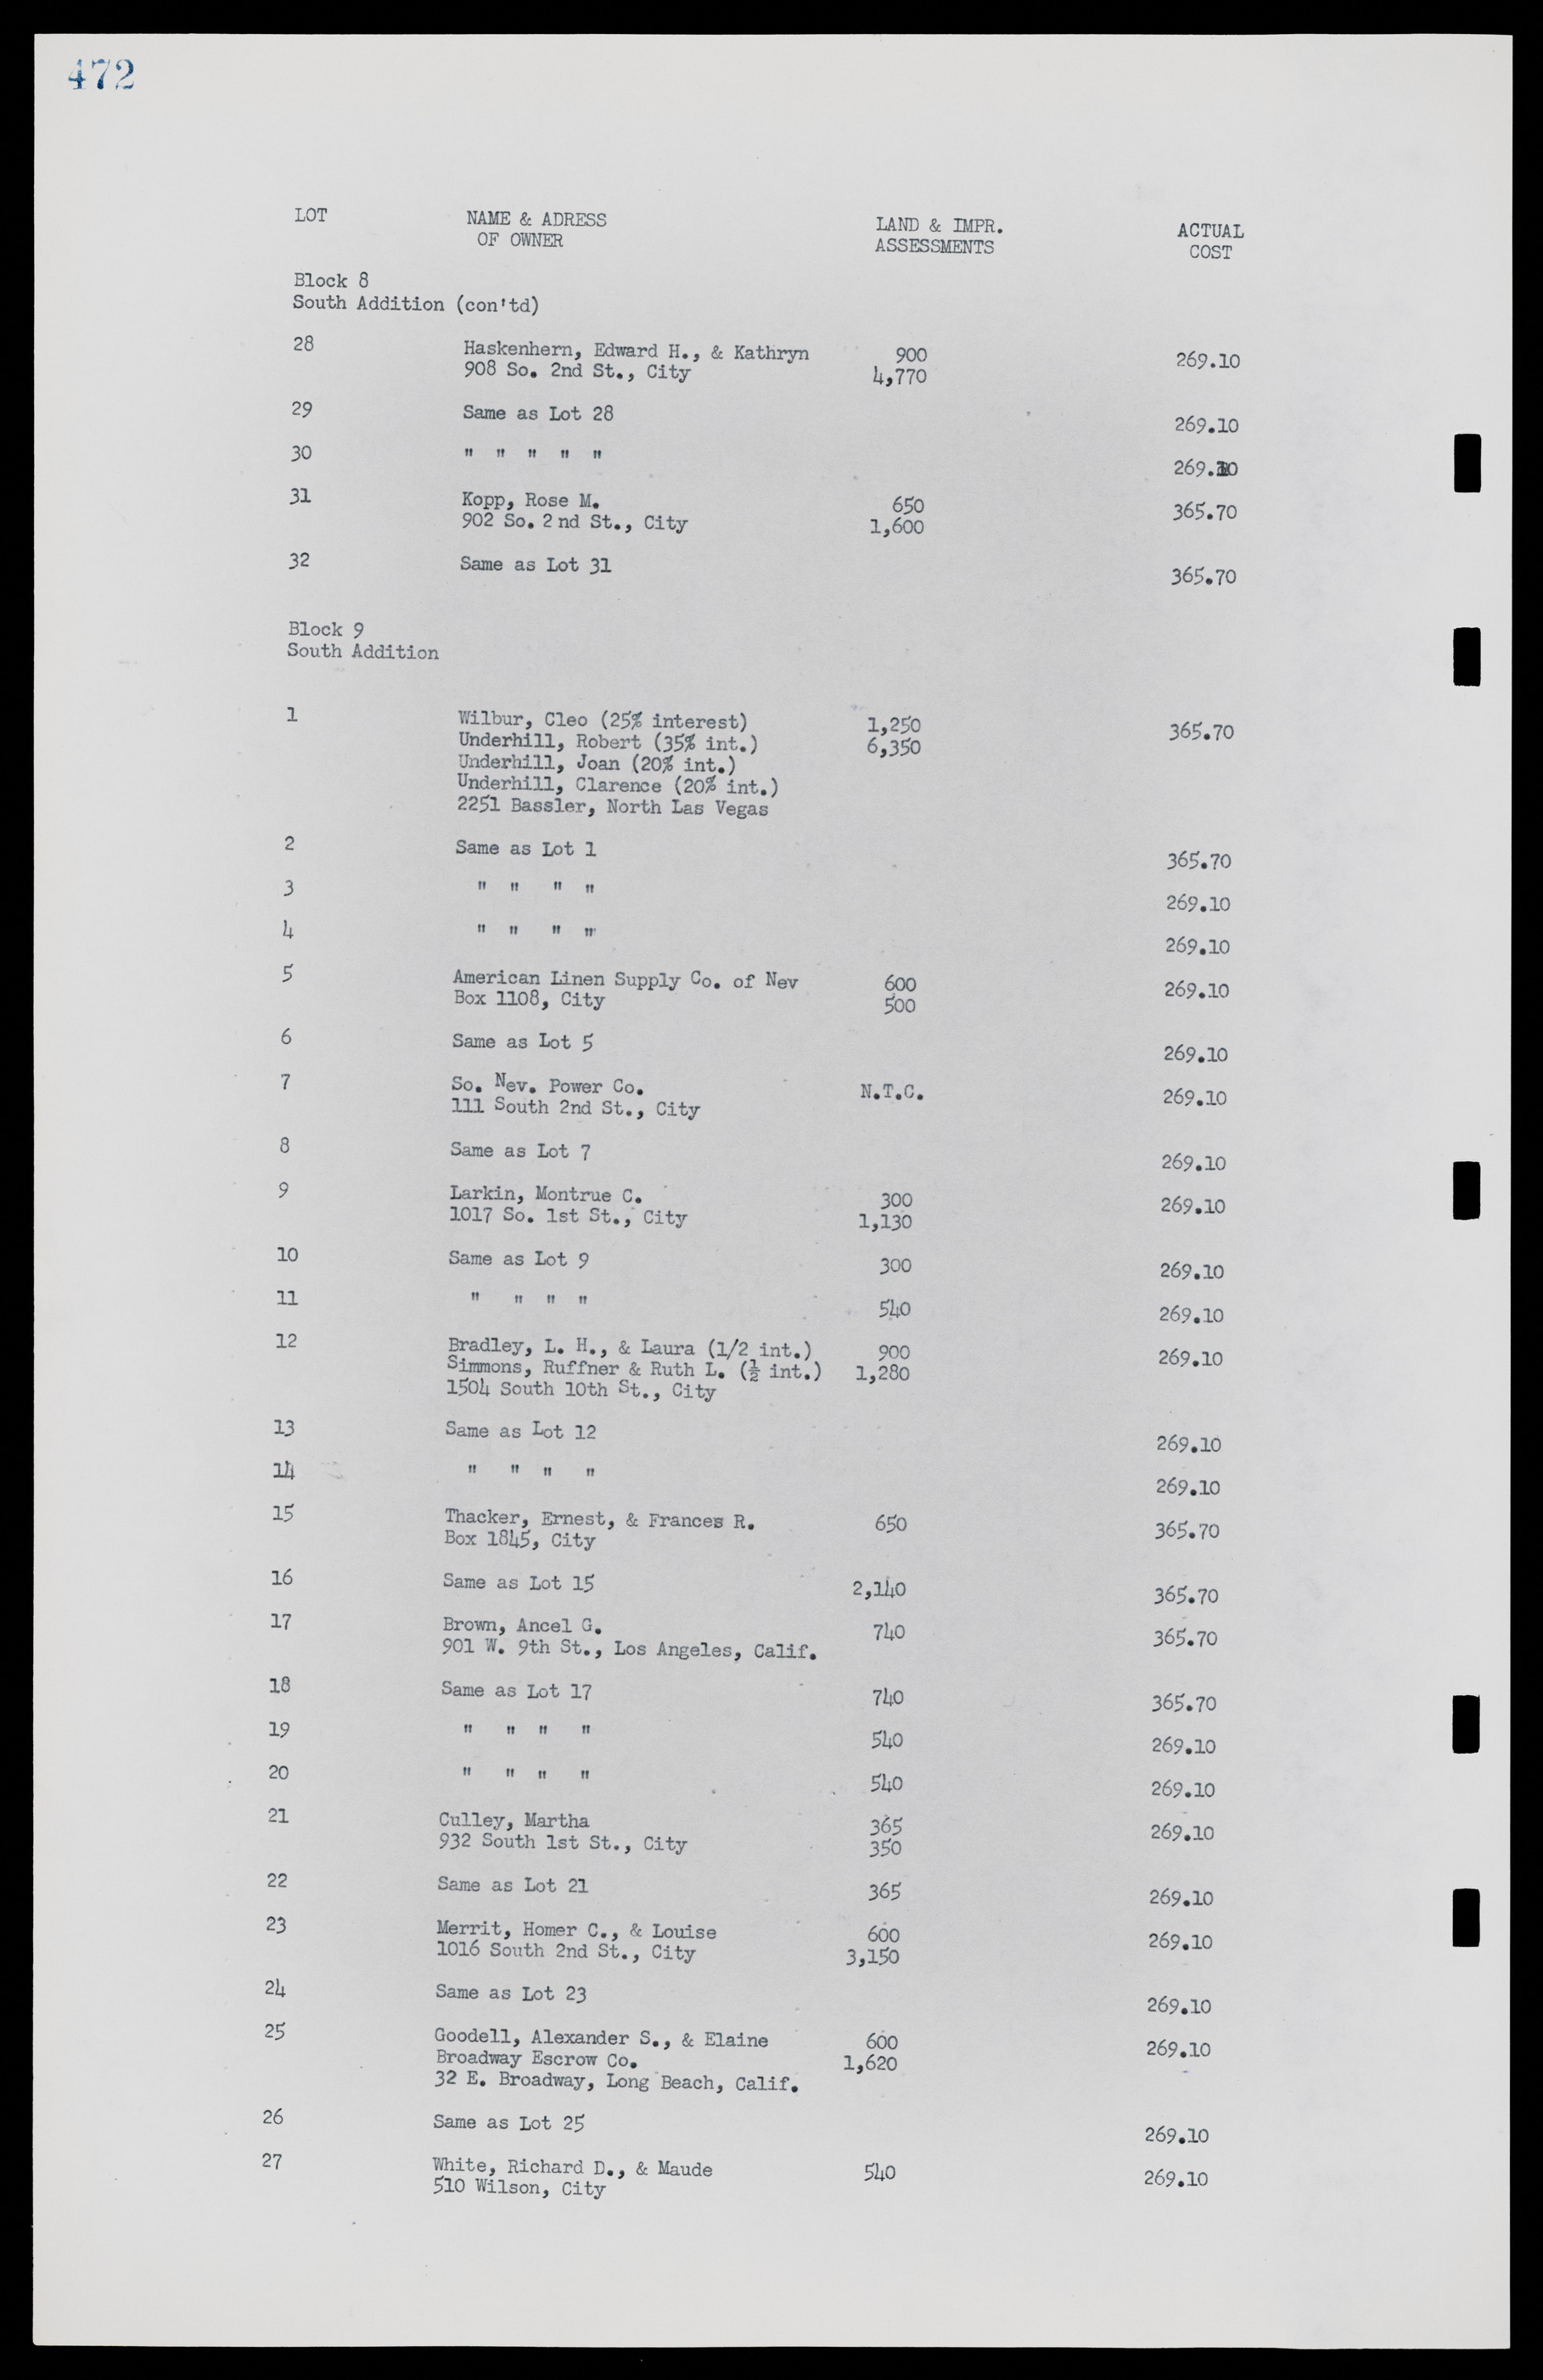 Las Vegas City Commission Minutes, November 7, 1949 to May 21, 1952, lvc000007-488